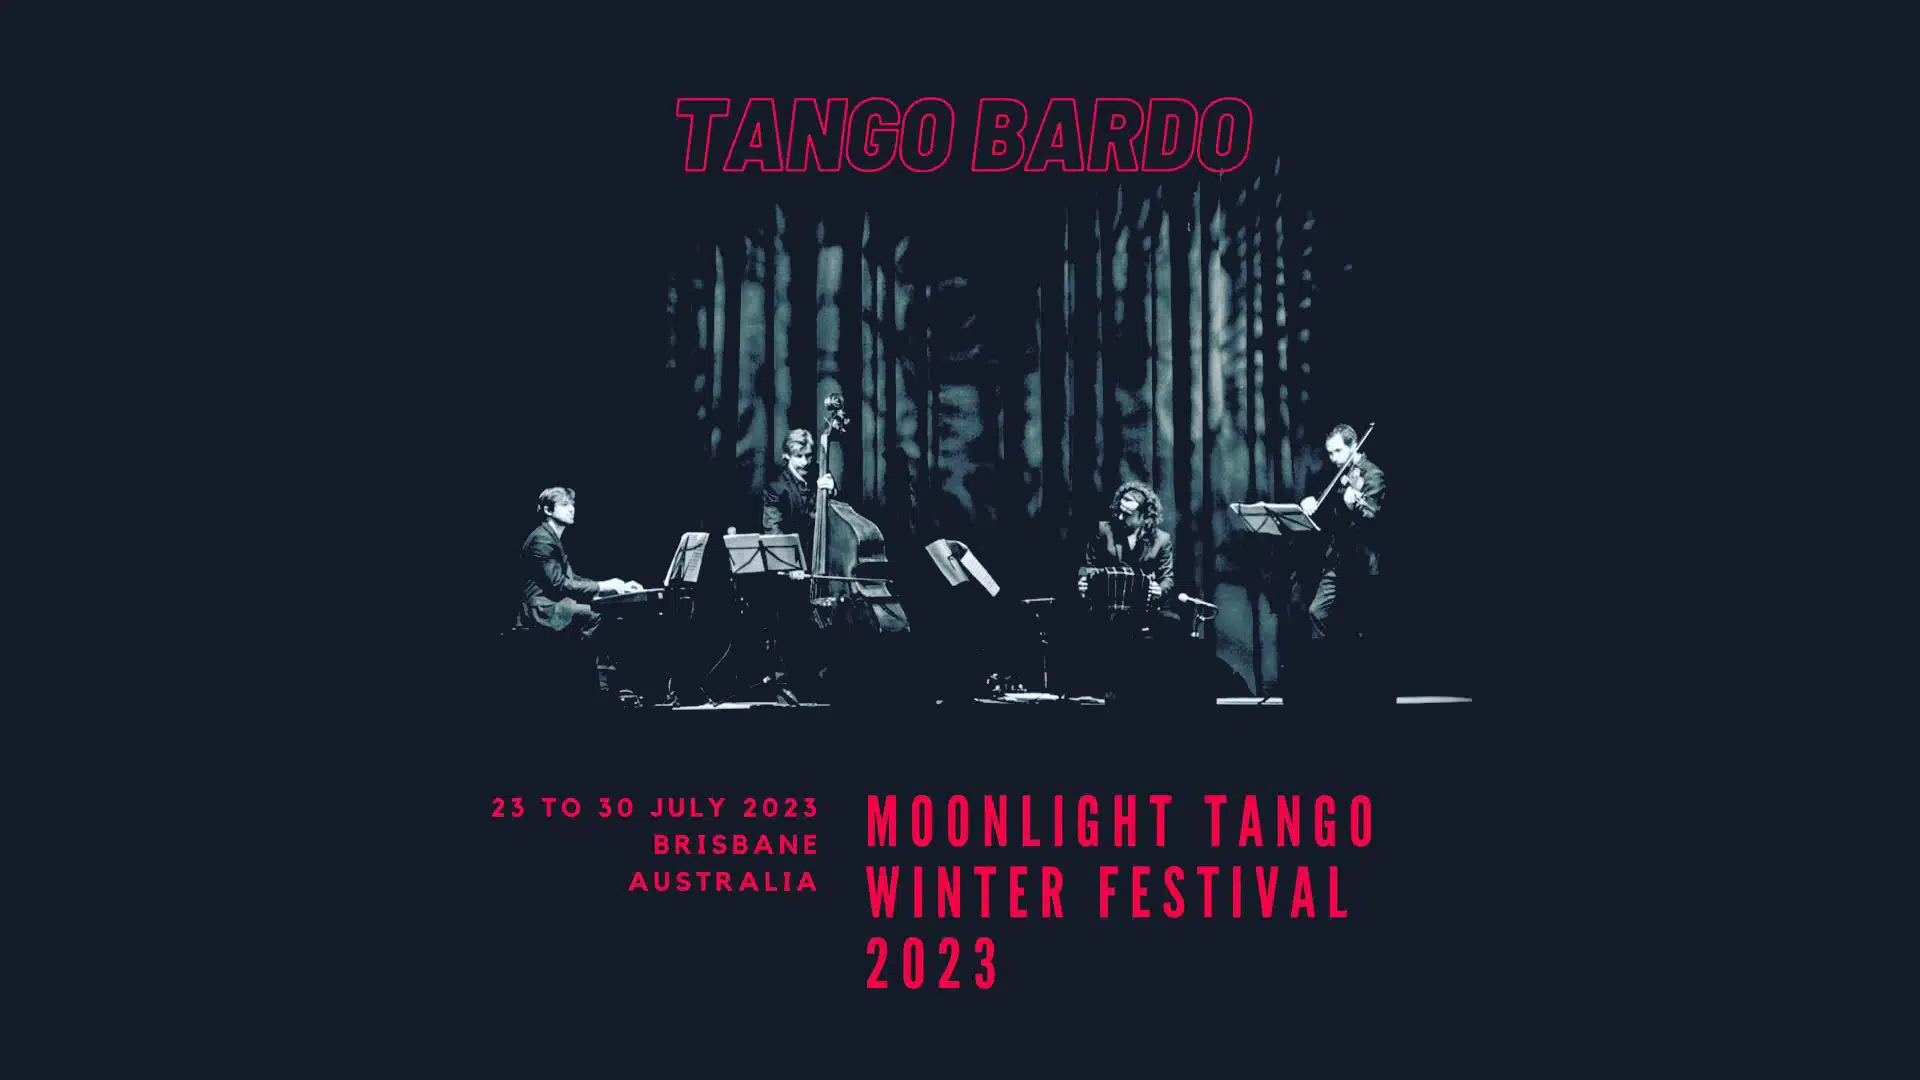 Brisbane Moonlight Tango Winter Festival 2023